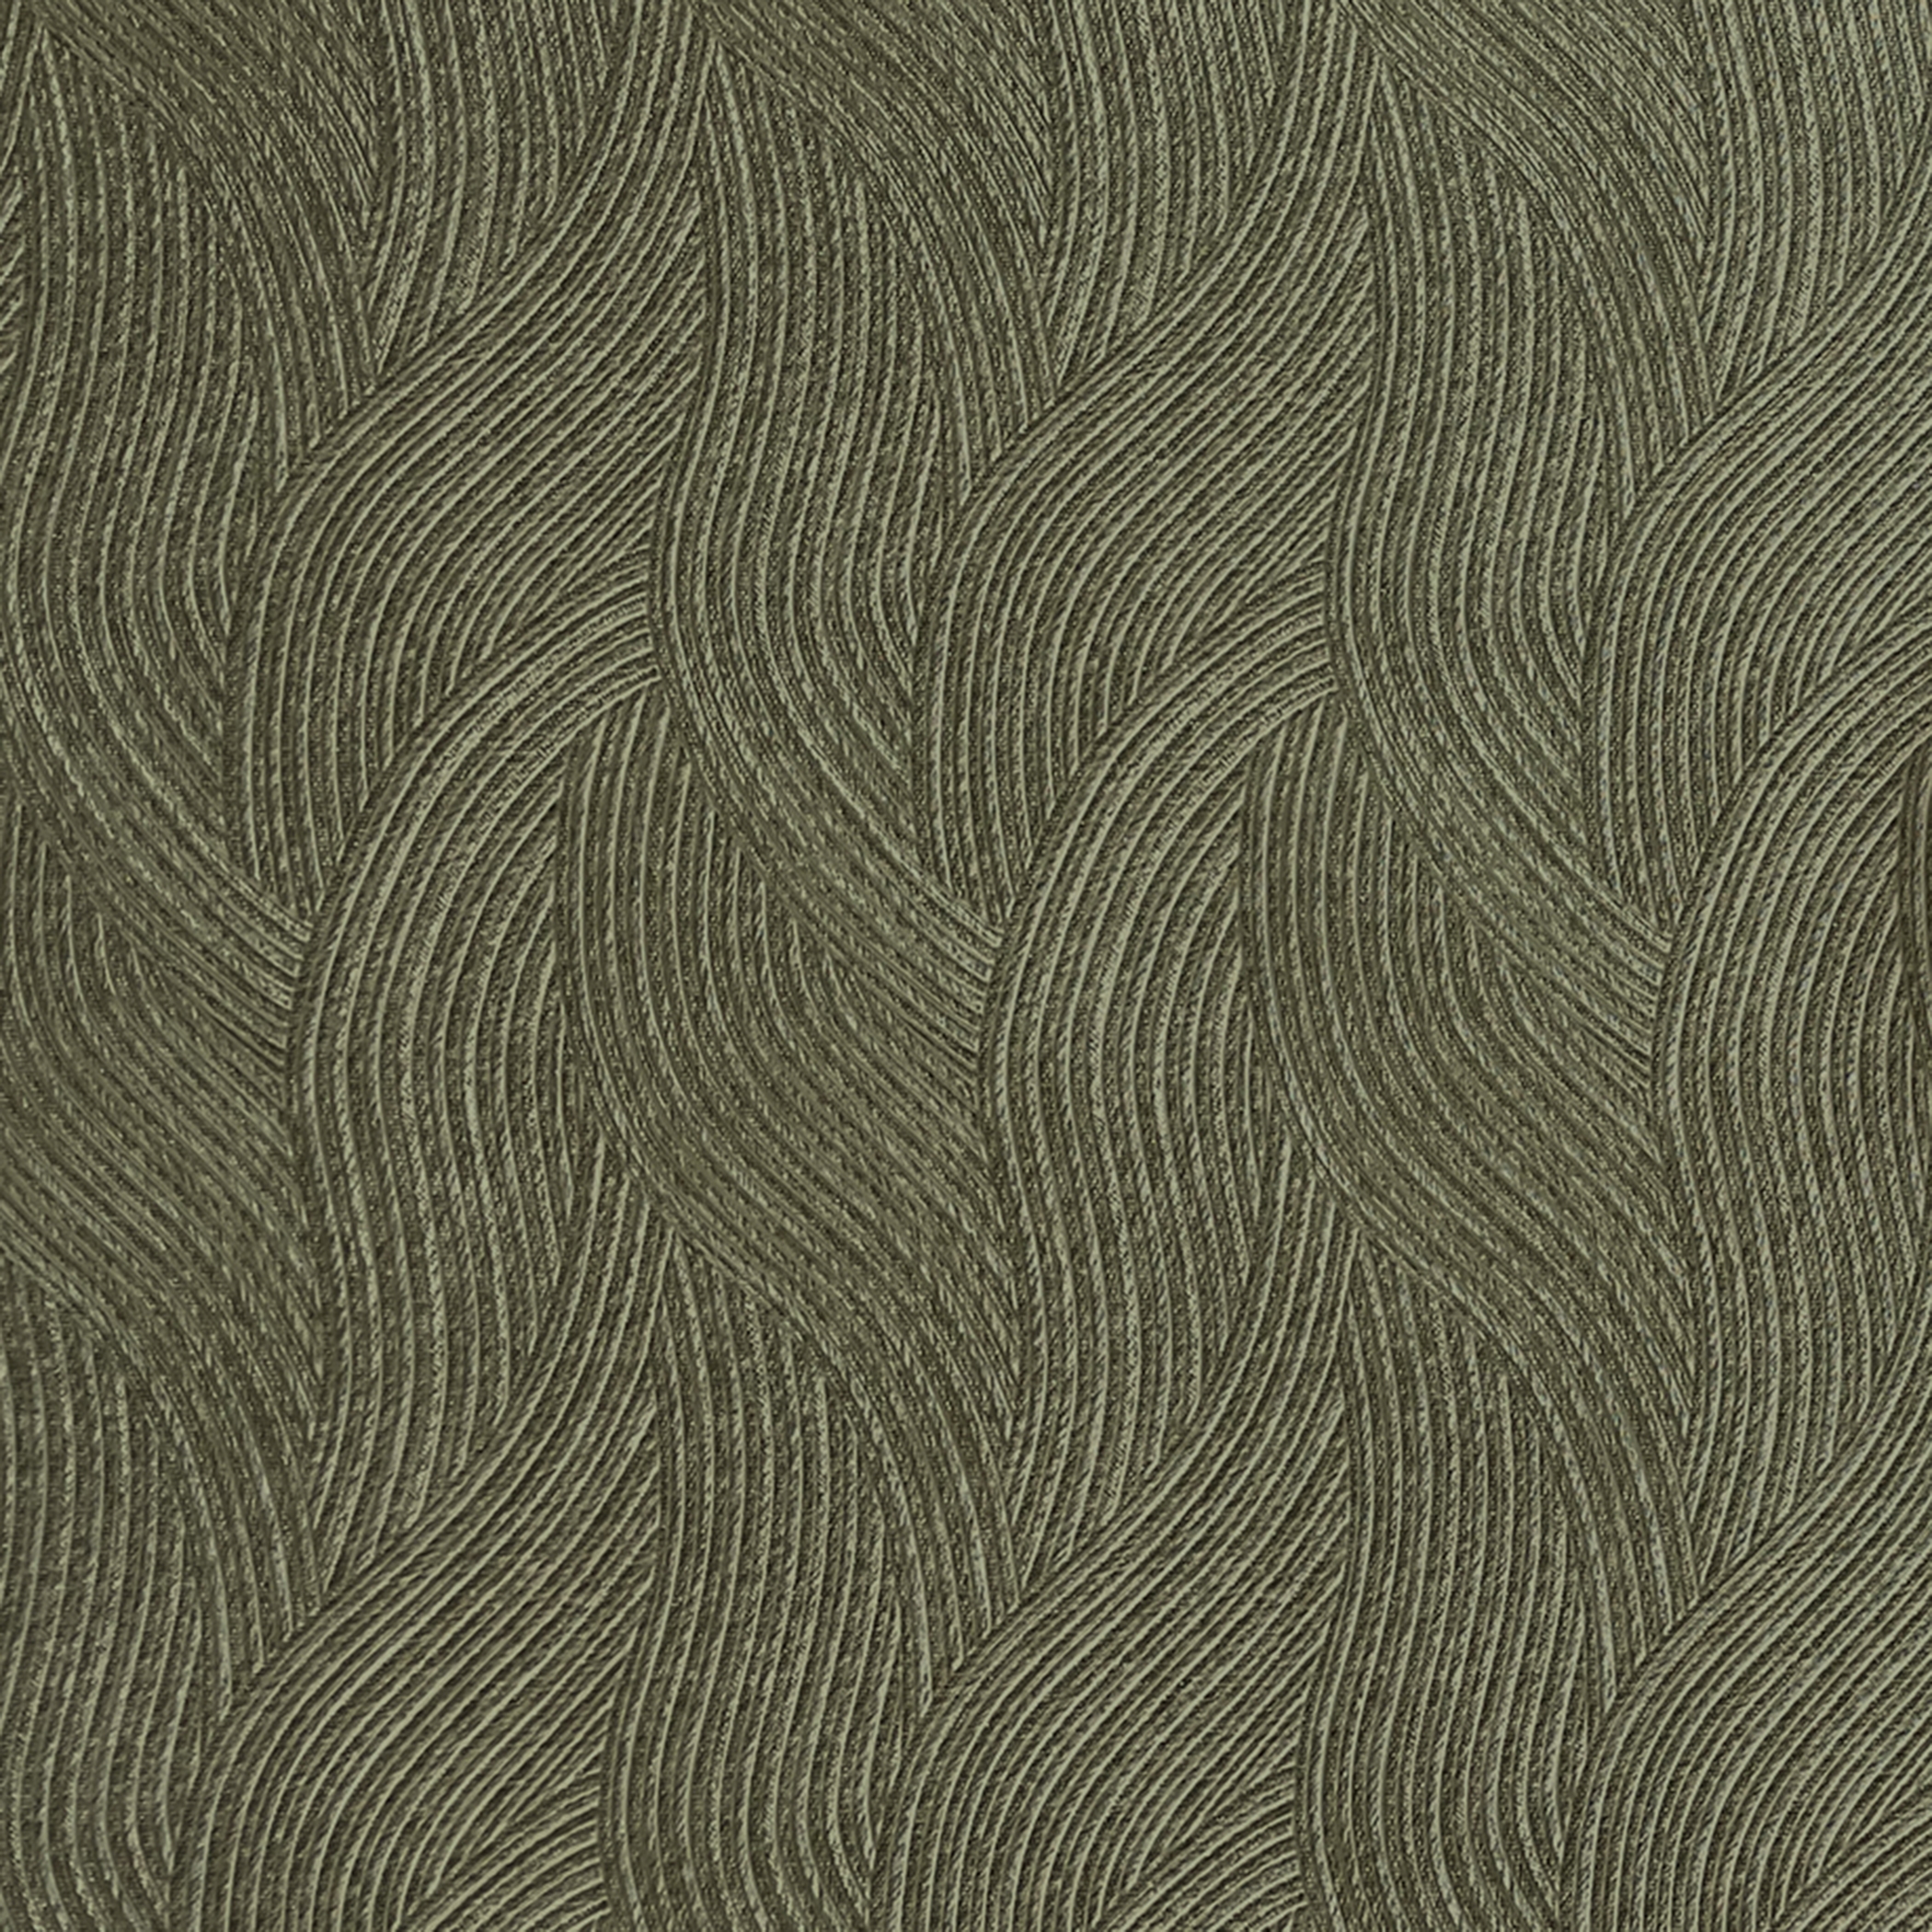 Tapet vinil, model textura, MallDeco Raymond 6-1277, 10.05 x 1.06 m